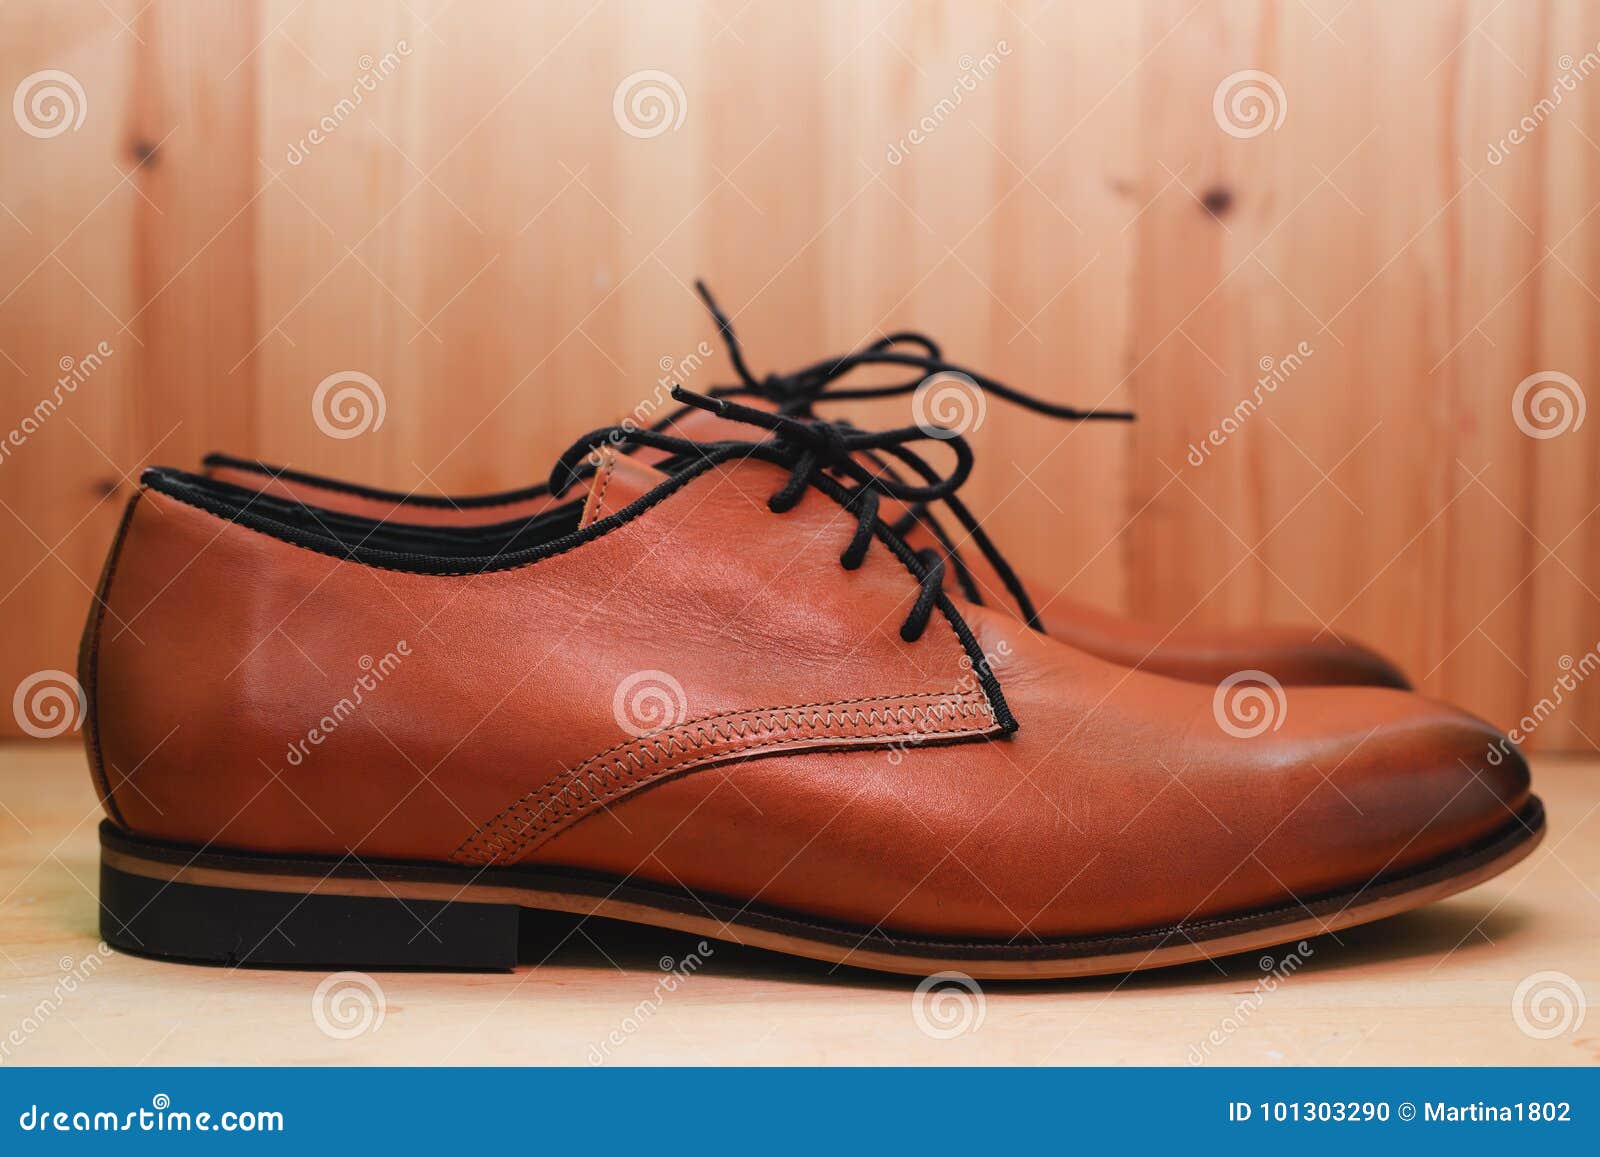 Fashion leather male shoes stock photo. Image of isolated - 101303290